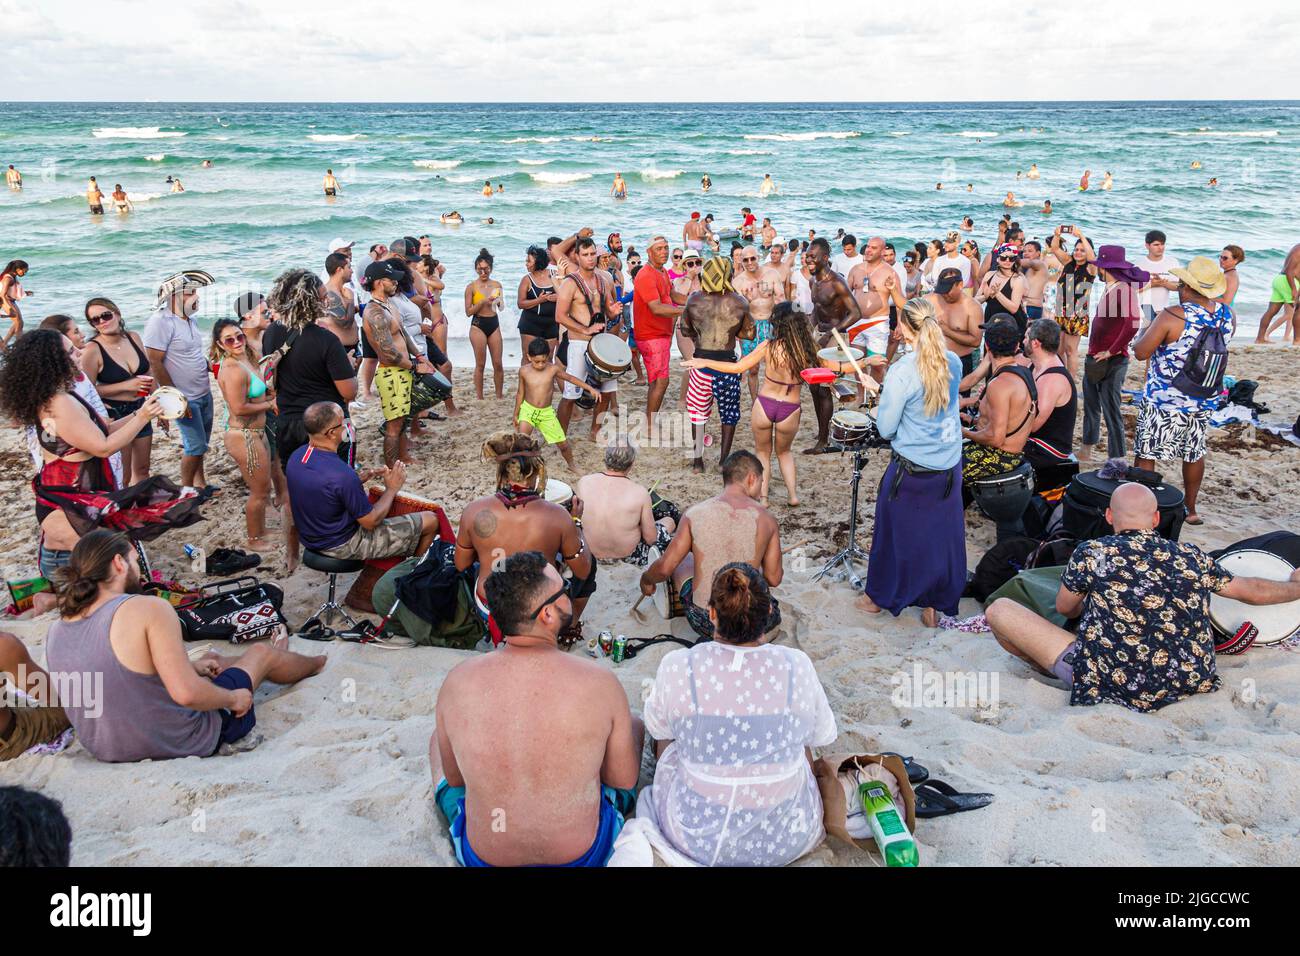 Miami Beach Florida,North Beach people sunbathers Hispanic men women families,Atlantic Ocean public beach drum circle dancers dancing people watching Stock Photo